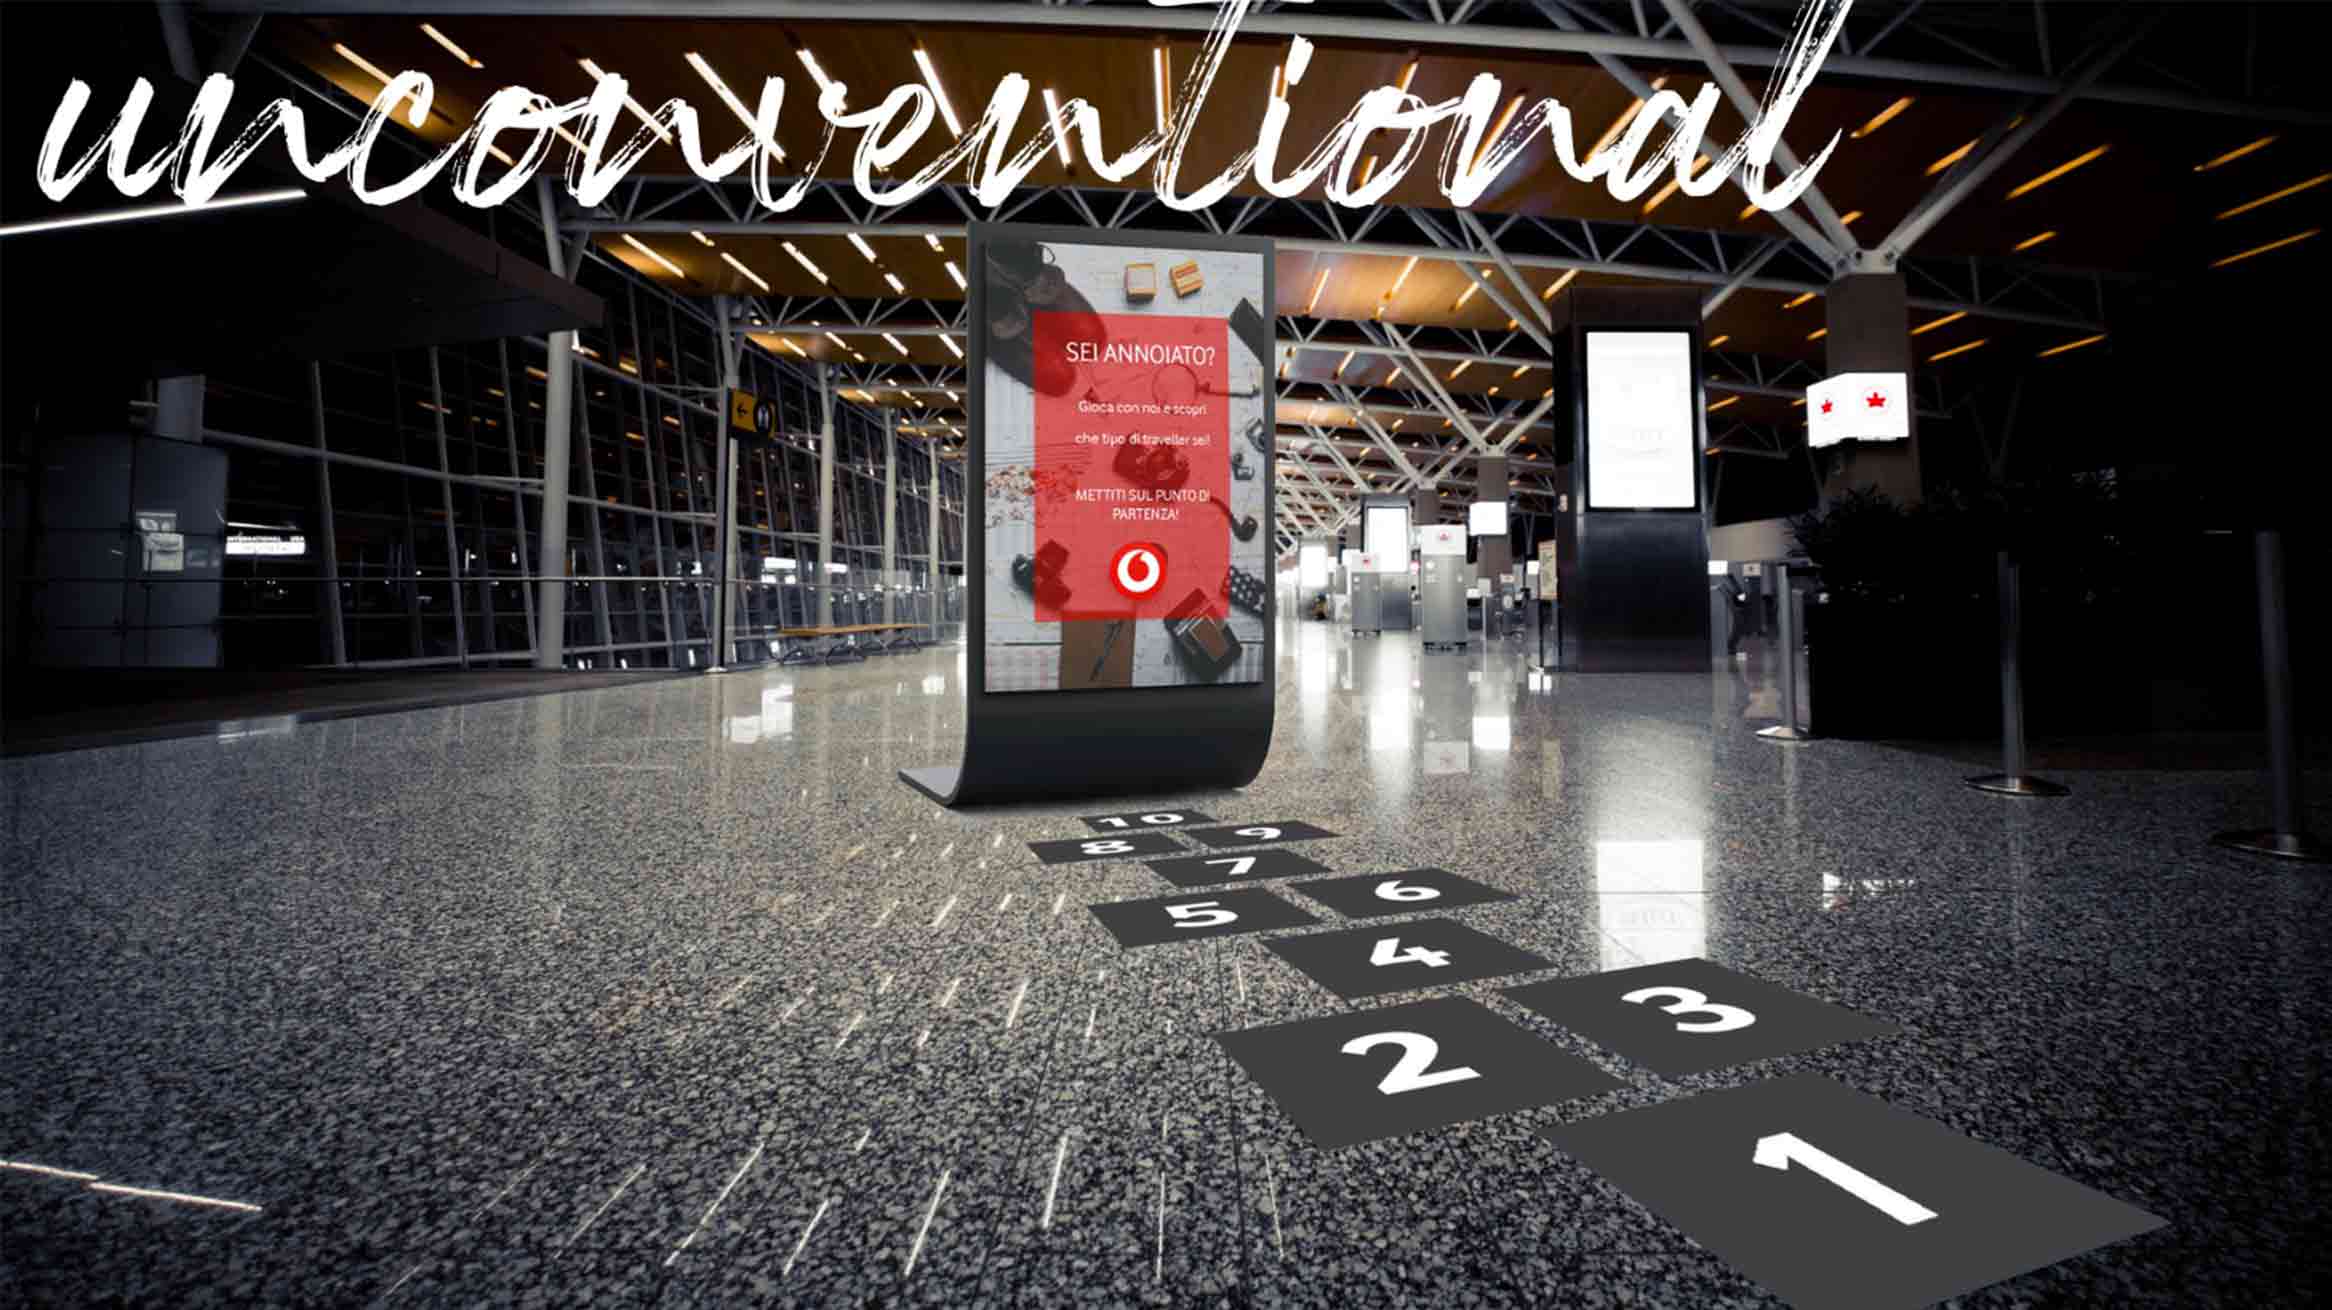 Vodafone Travel Fuel, unconventional airport